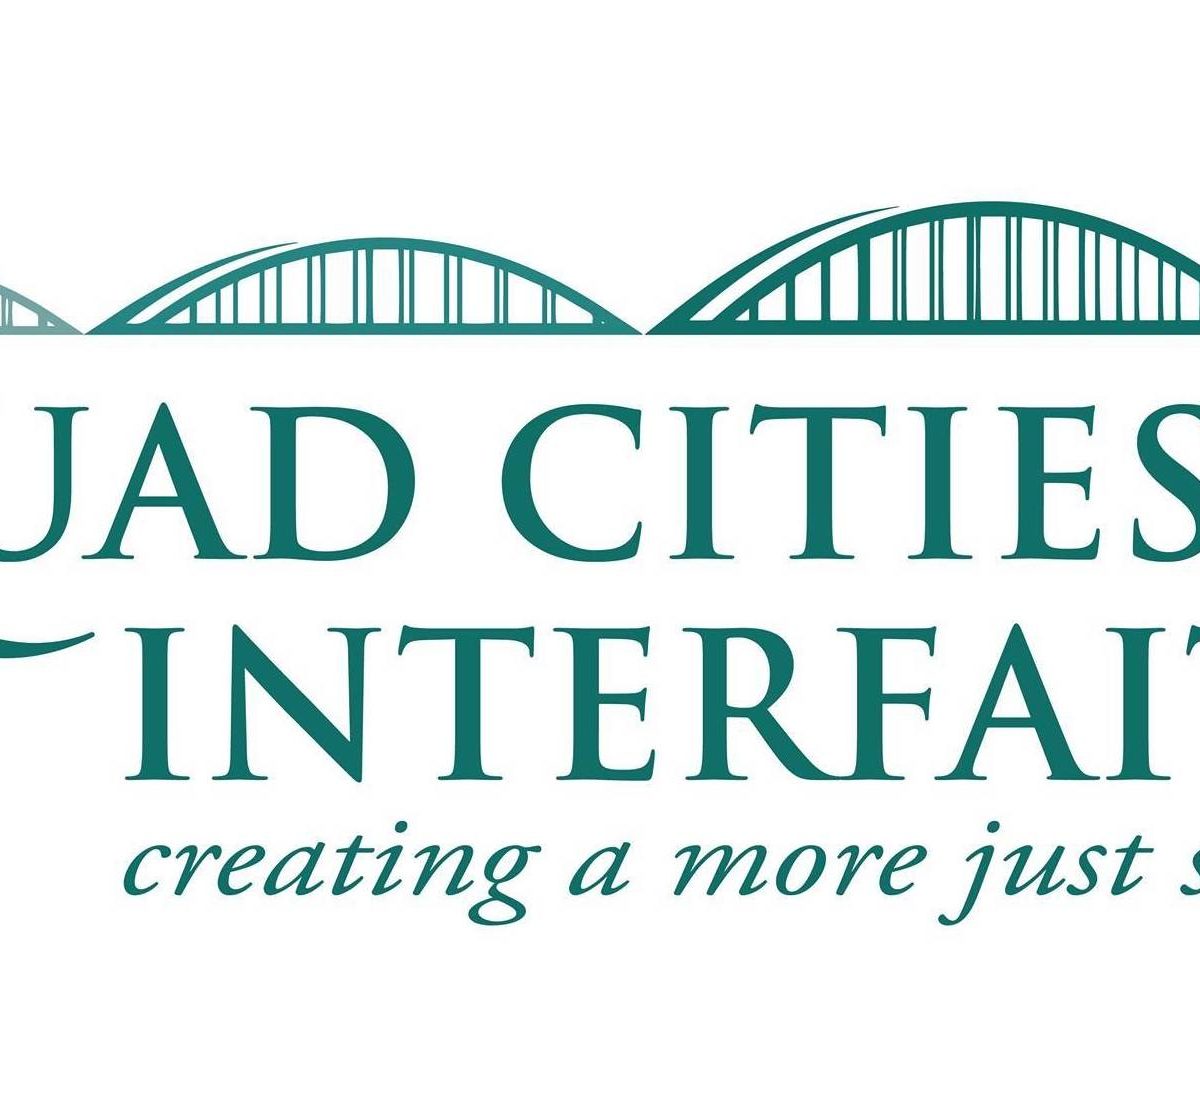 Quad Cities Interfaith logo